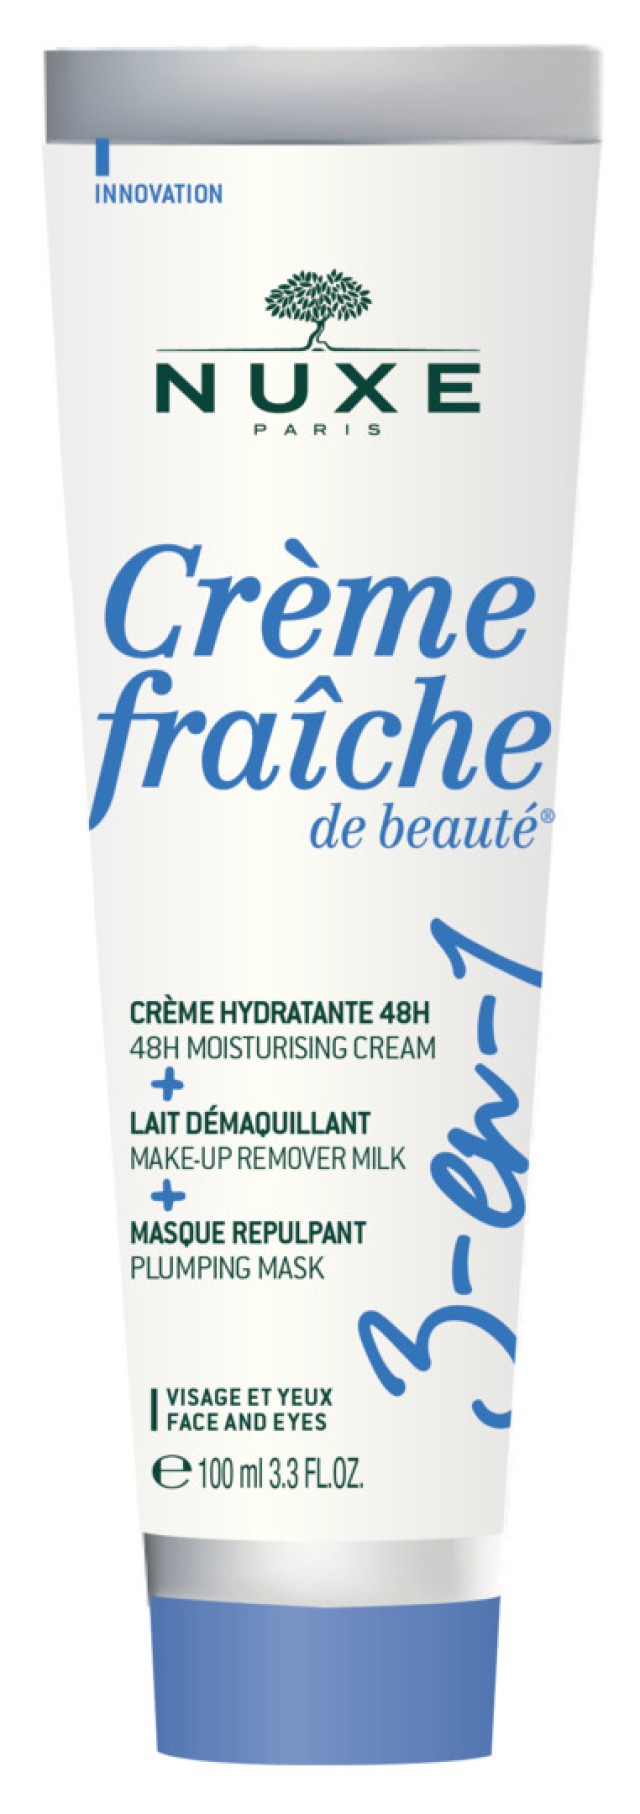 Nuxe Crème Fraiche De Beauté® 3 in 1 Προϊόν 48ωρη Ενυδατική Κρέμα + Γαλάκτωμα Ντεμακιγιάζ + Μάσκα Επαναπύκνωσης 100ml